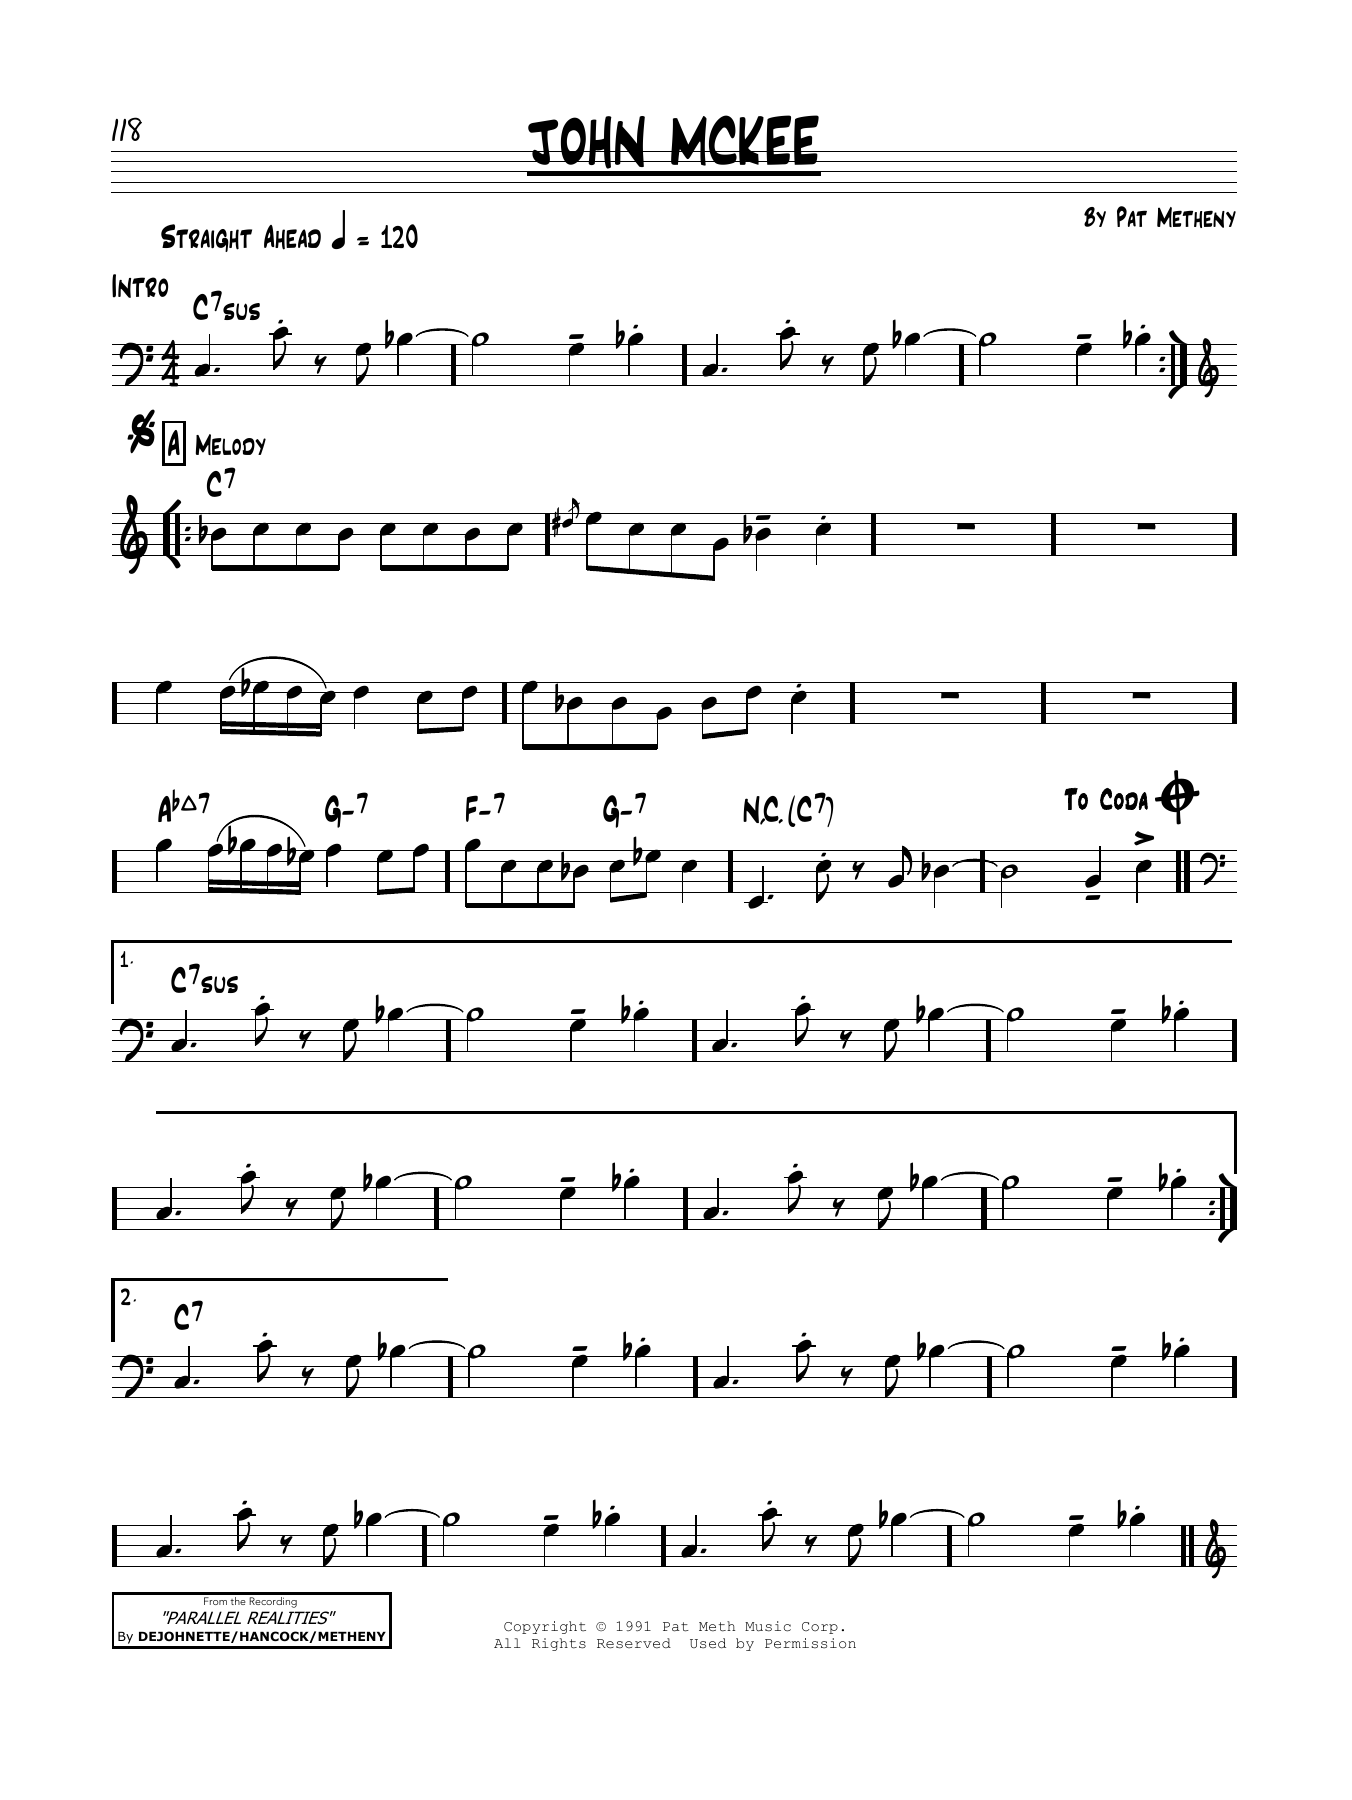 Pat Metheny John McKee Sheet Music Notes & Chords for Real Book – Melody & Chords - Download or Print PDF